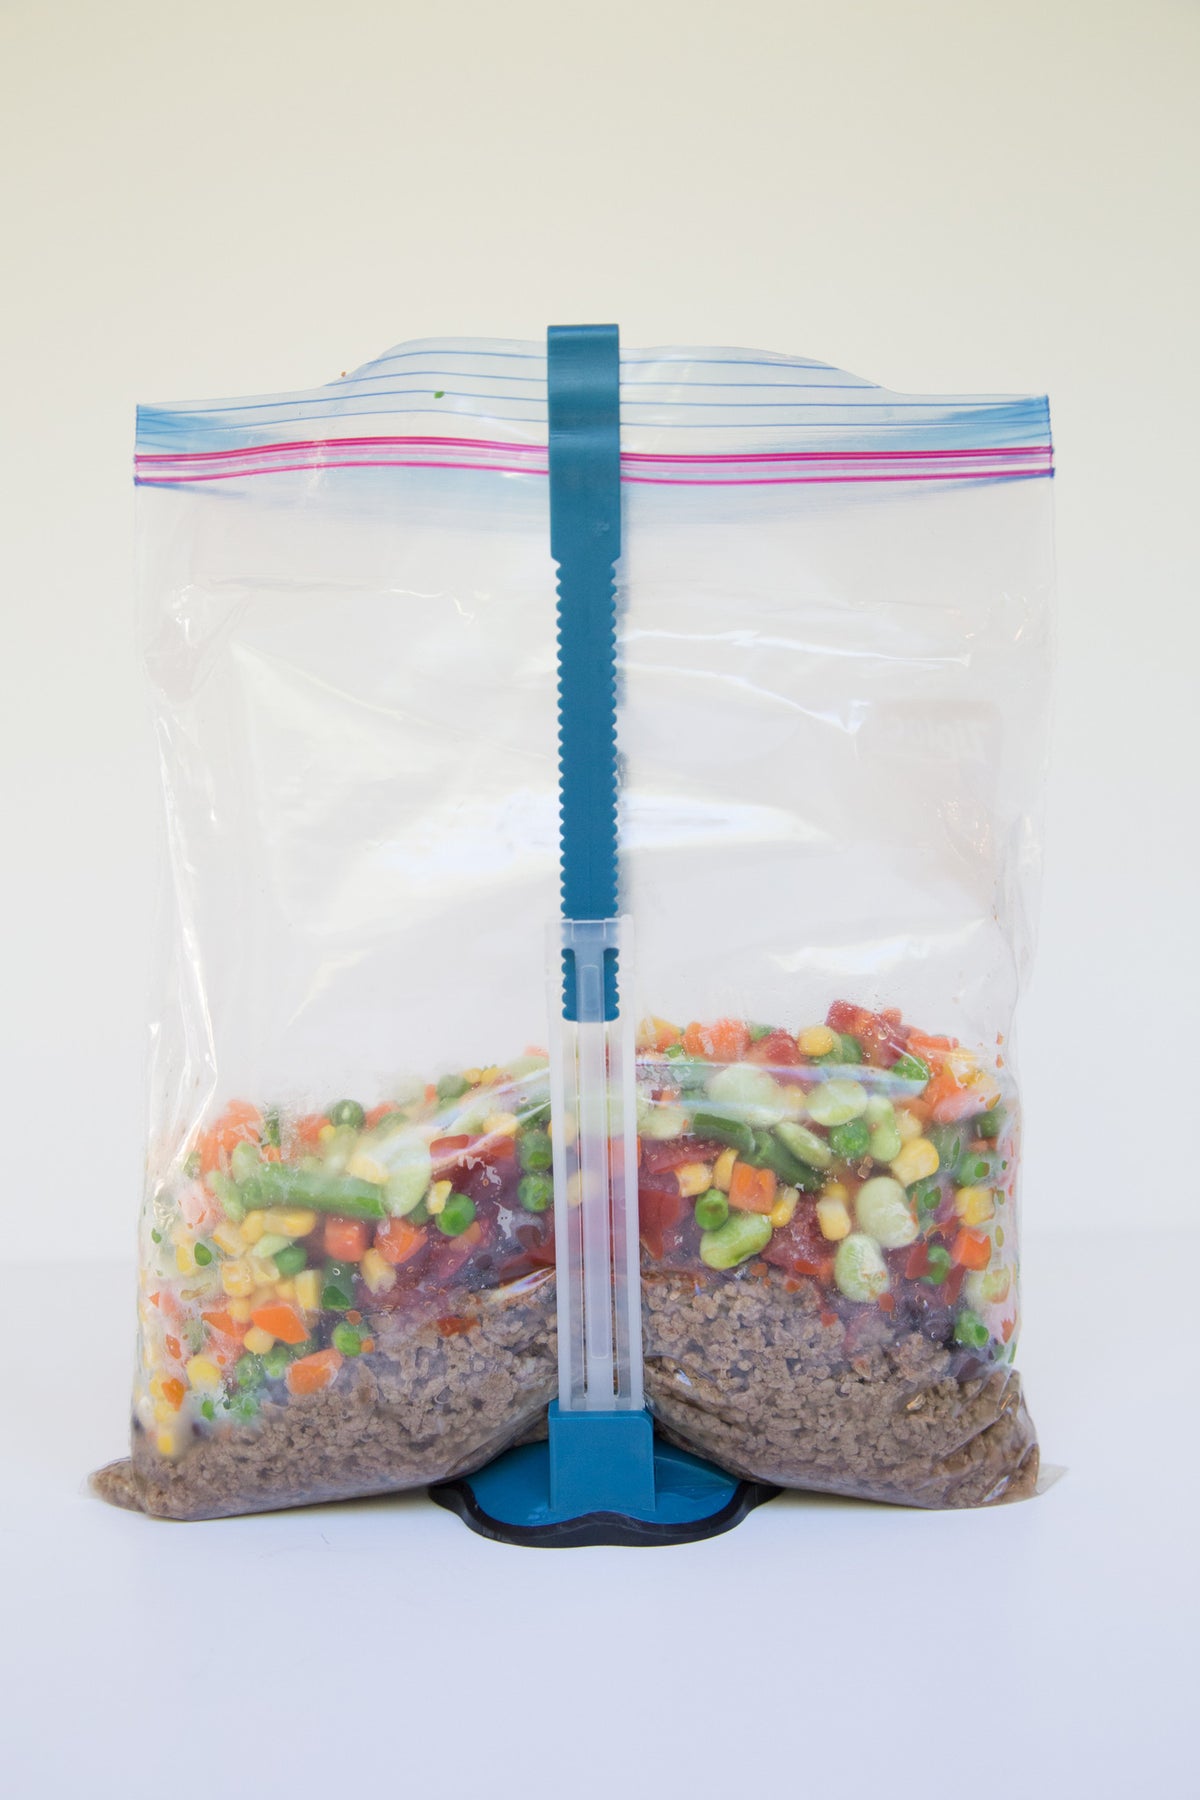 Bag Holder for Plastic Bags, Freezer Meal Ziplock Bag Holder Stand